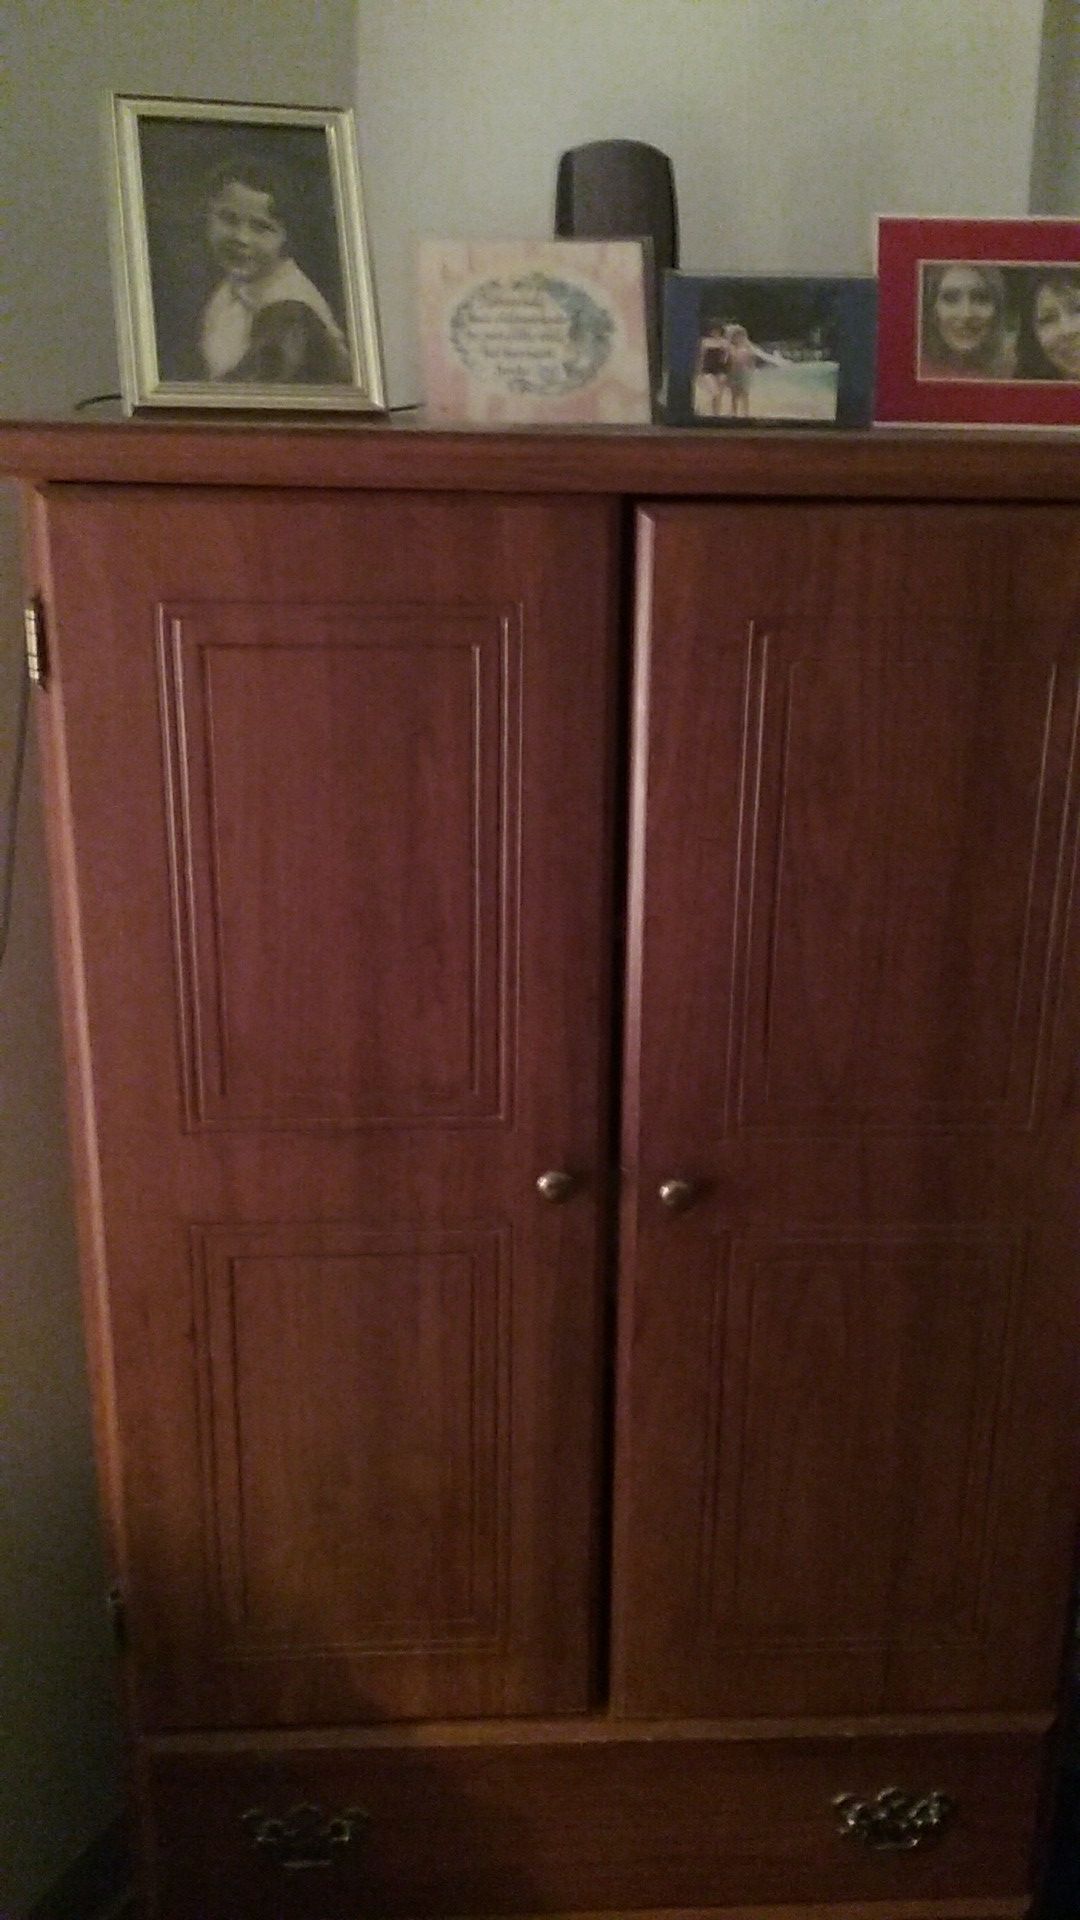 2 door storage cabinet, 3 shelf space inside, two drawers below